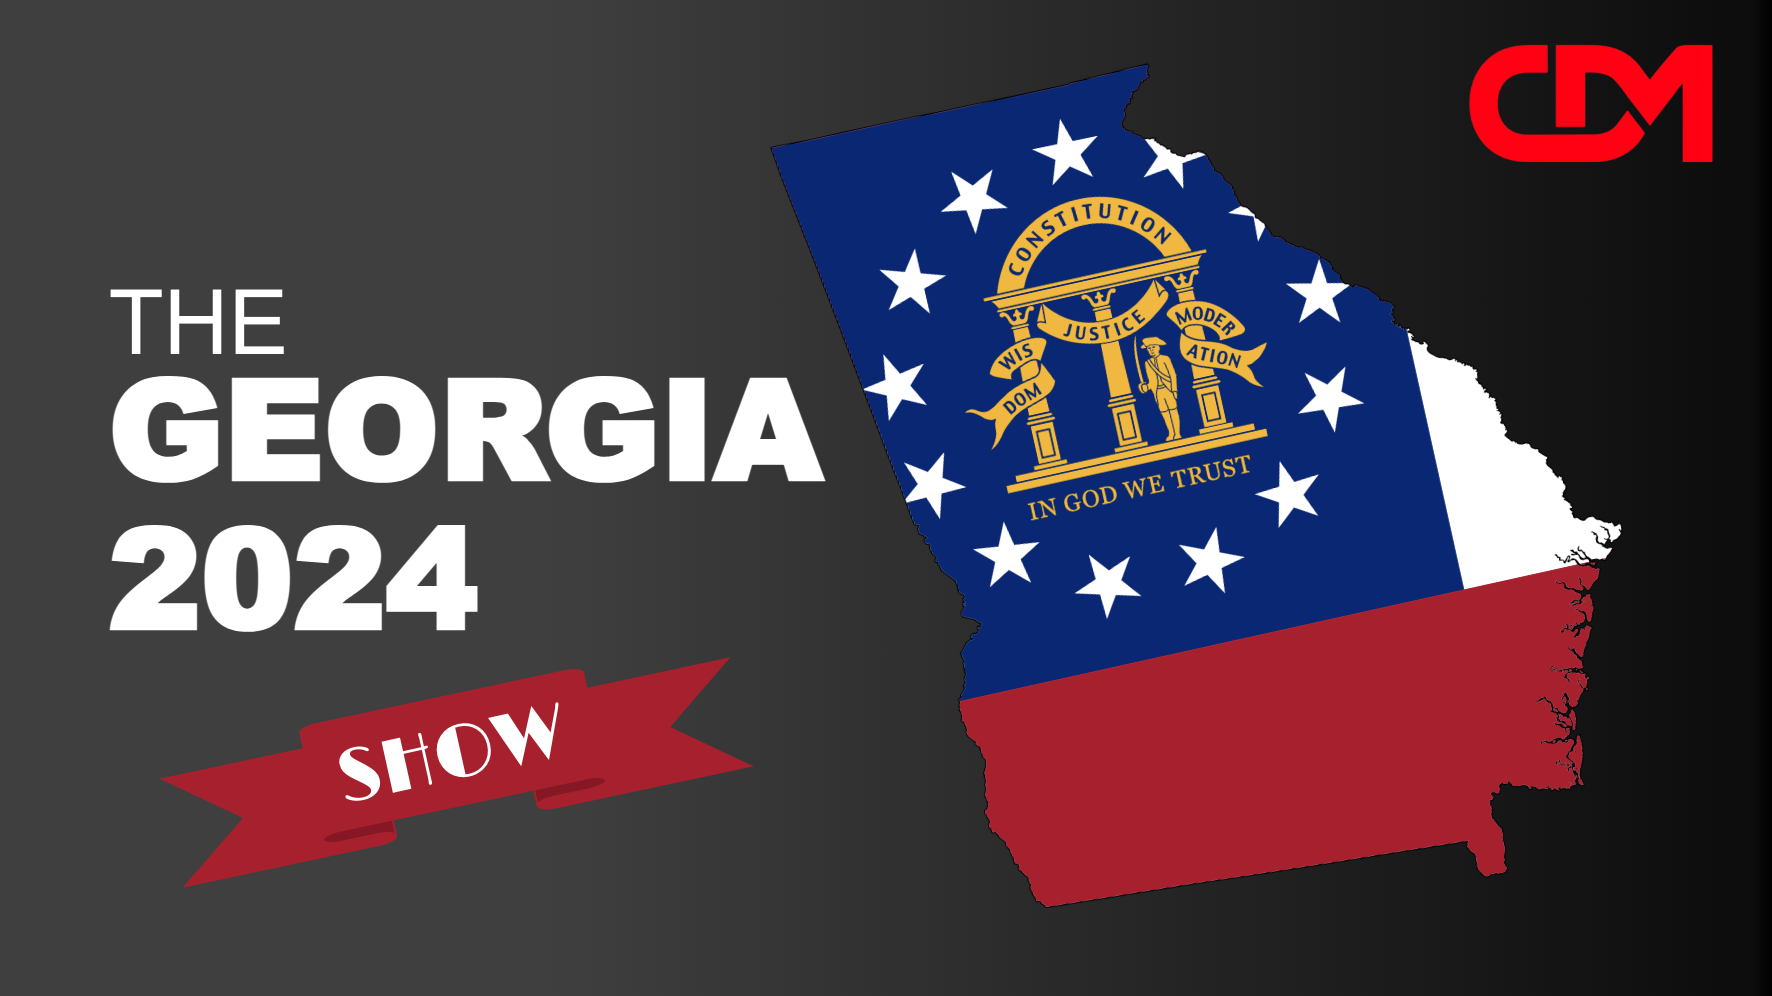 LIVESTREAM 2pm EST: The Georgia 2024 Show! Sen Colton Moore, Charlice Byre, Chris Gleason